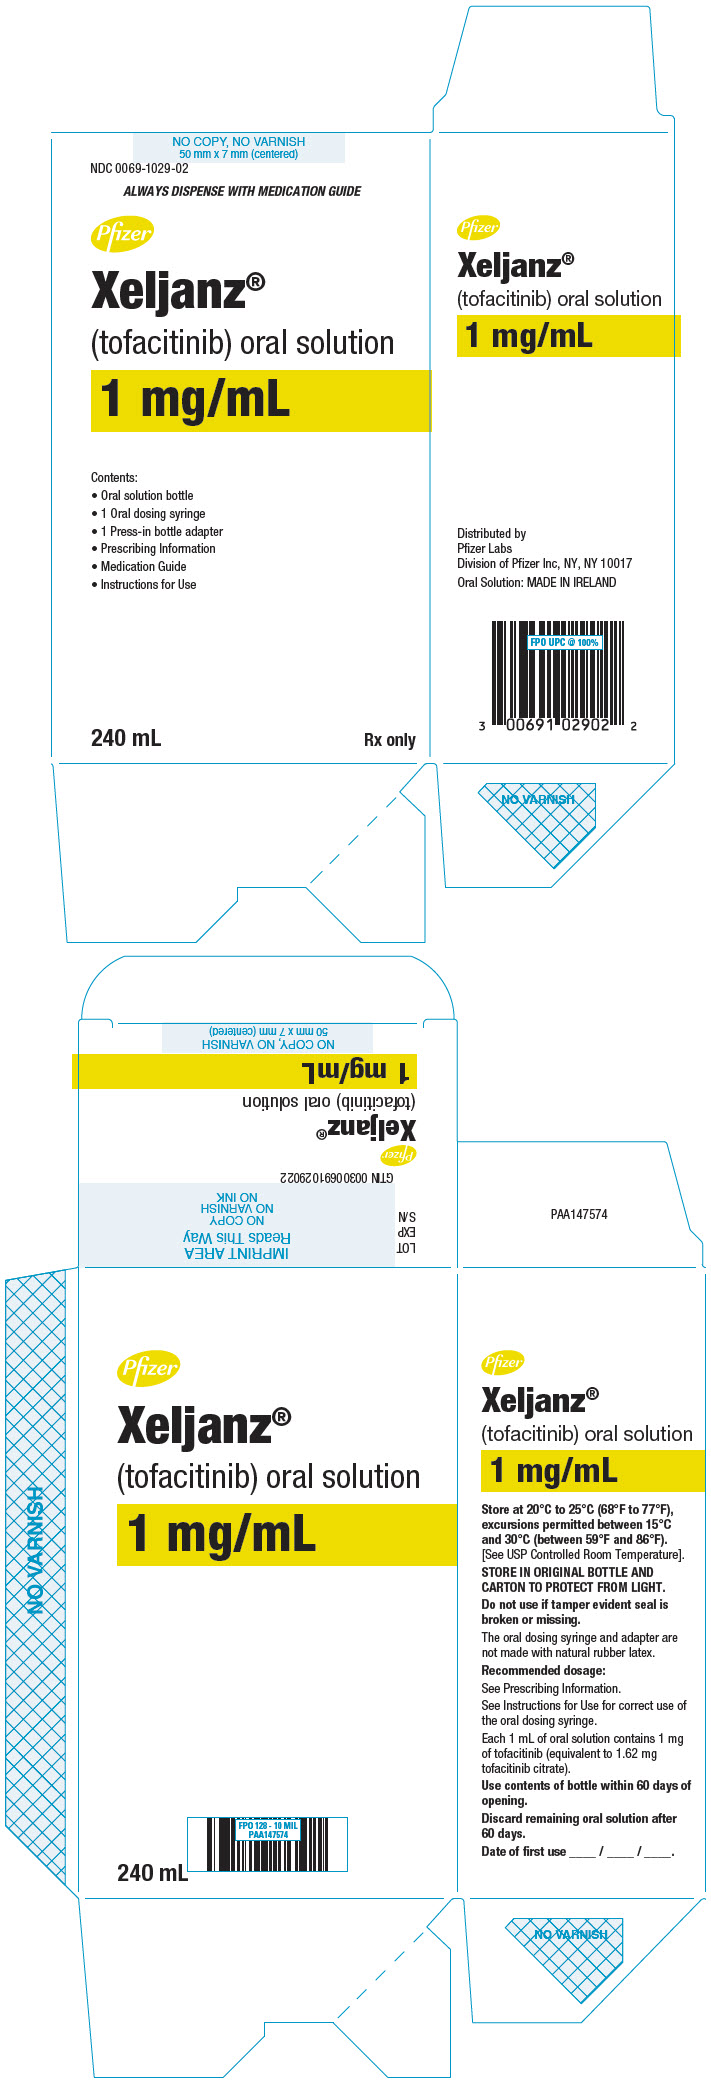 PRINCIPAL DISPLAY PANEL - 240 mL Bottle Carton